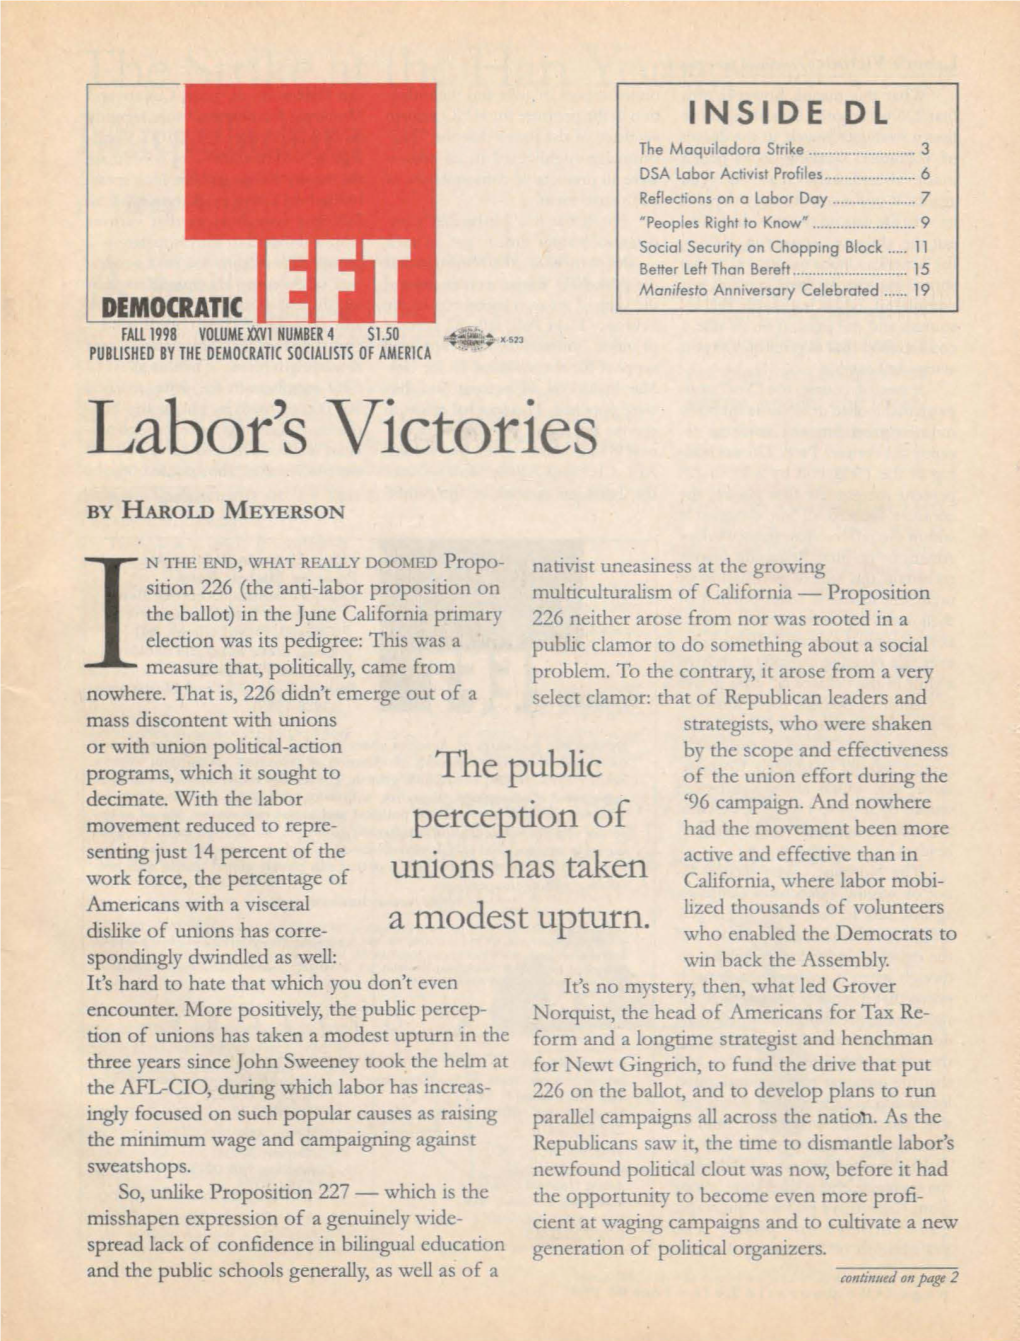 Labor's Victories